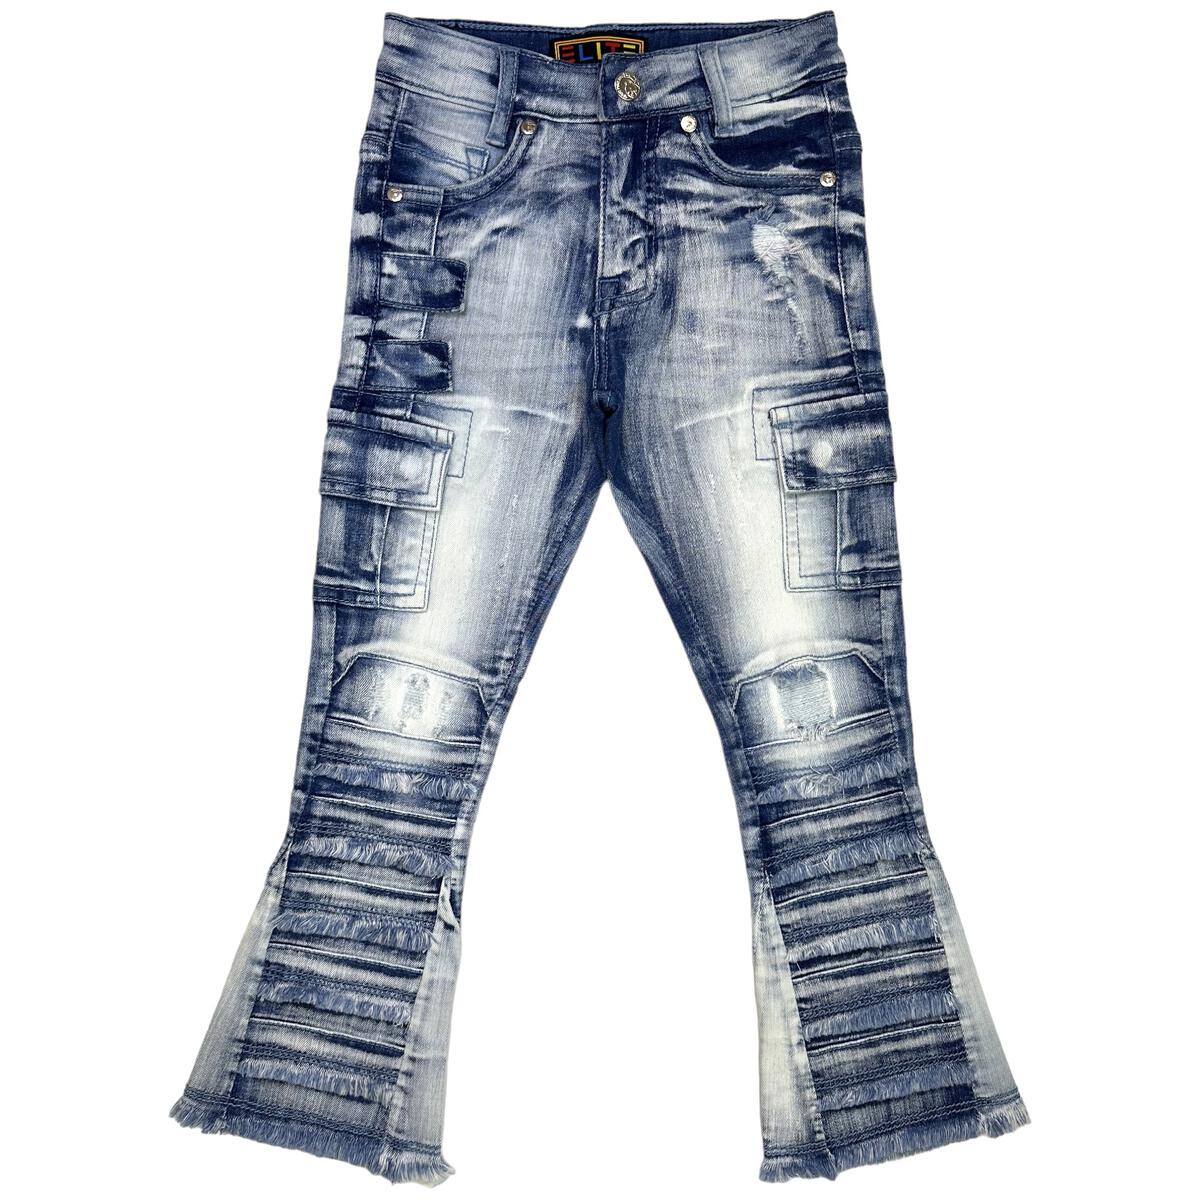 Kids Premium Denim Jeans - Blue Wash